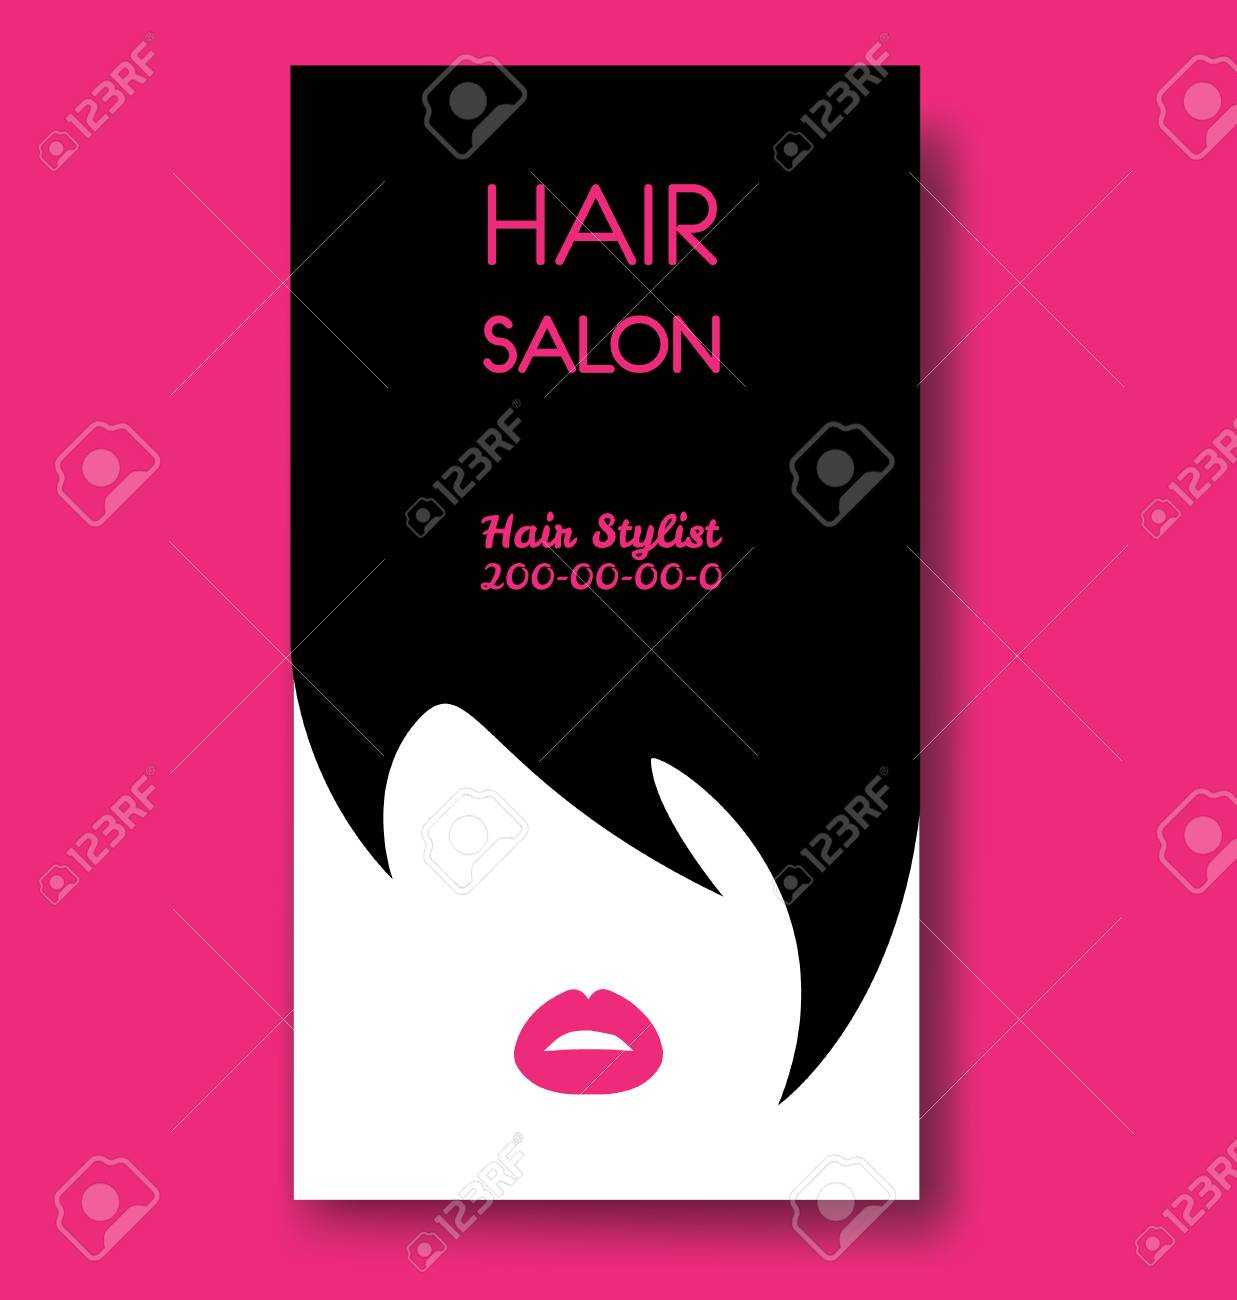 Hair Salon Business Card Templates With Black Hair And Beautiful For Hair Salon Business Card Template